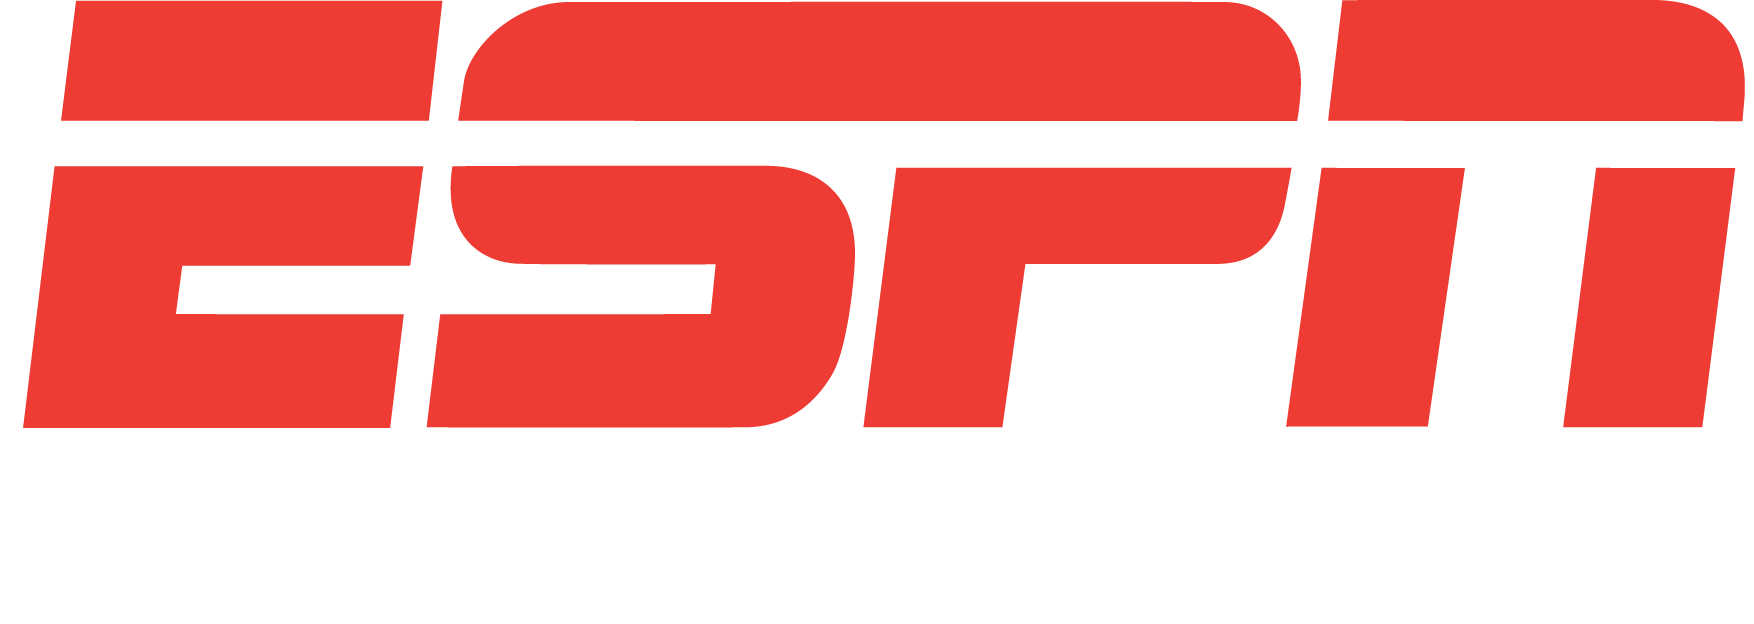 ESPN SWFL